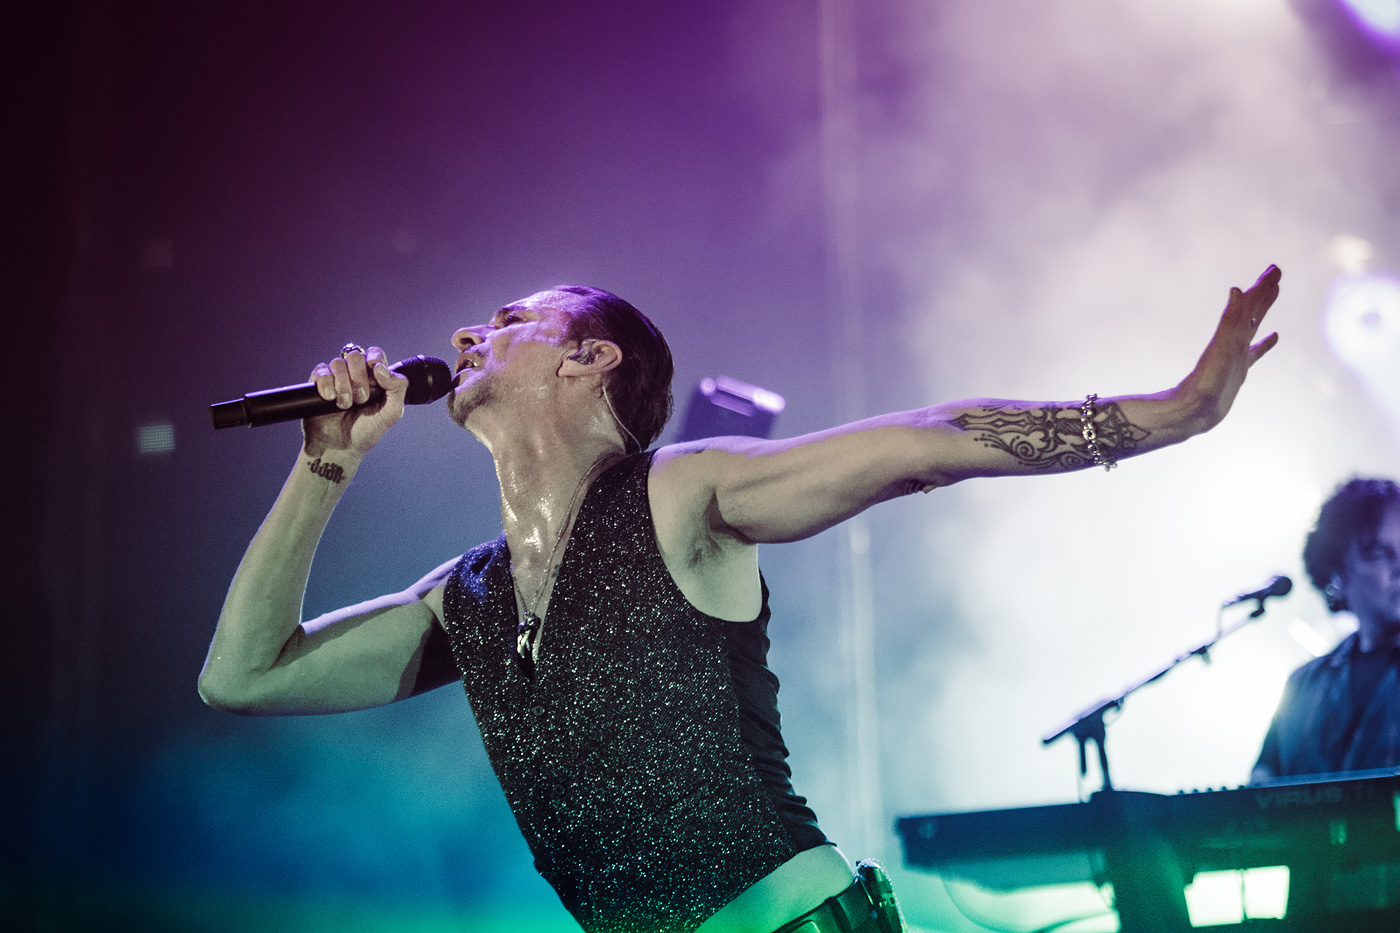 Depeche Mode Concert Photos - Denver, Colorado 2017 - Pepsi Center